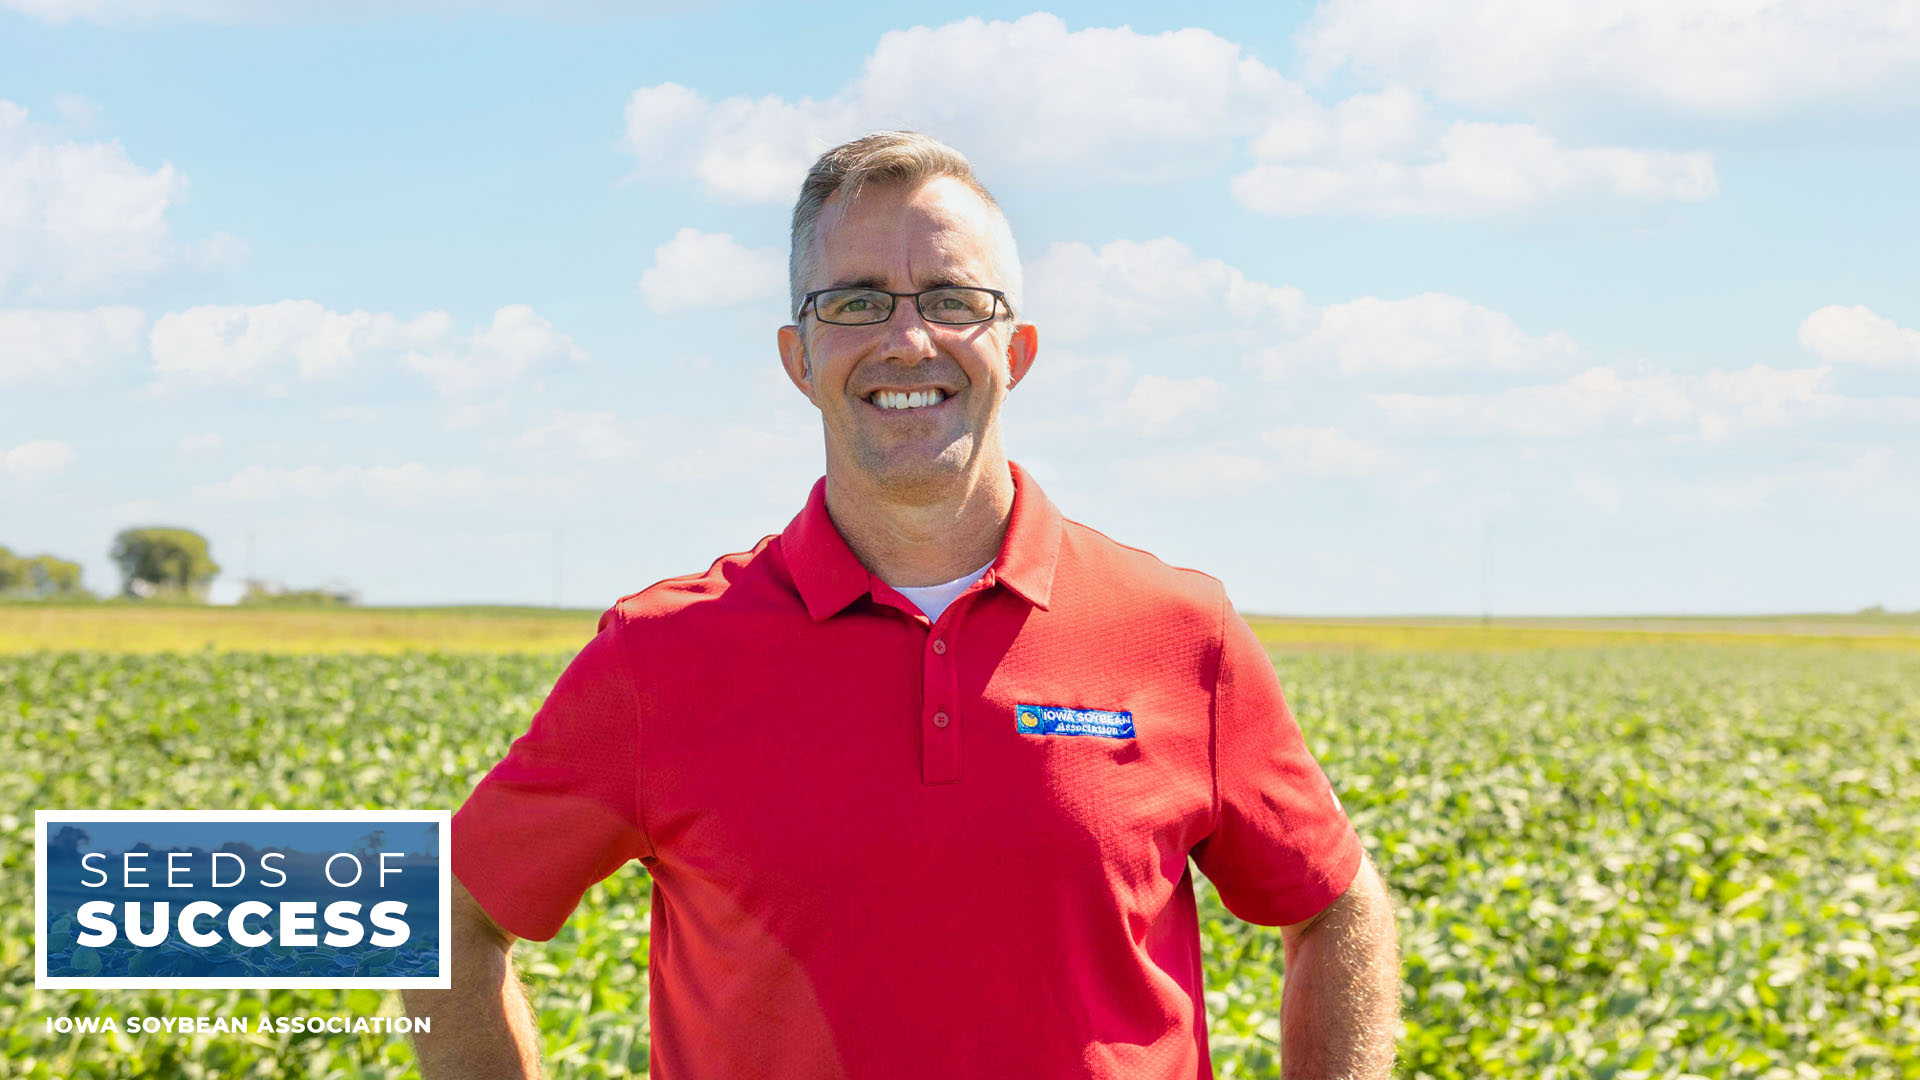 Iowa soybean farmer Brent Swart